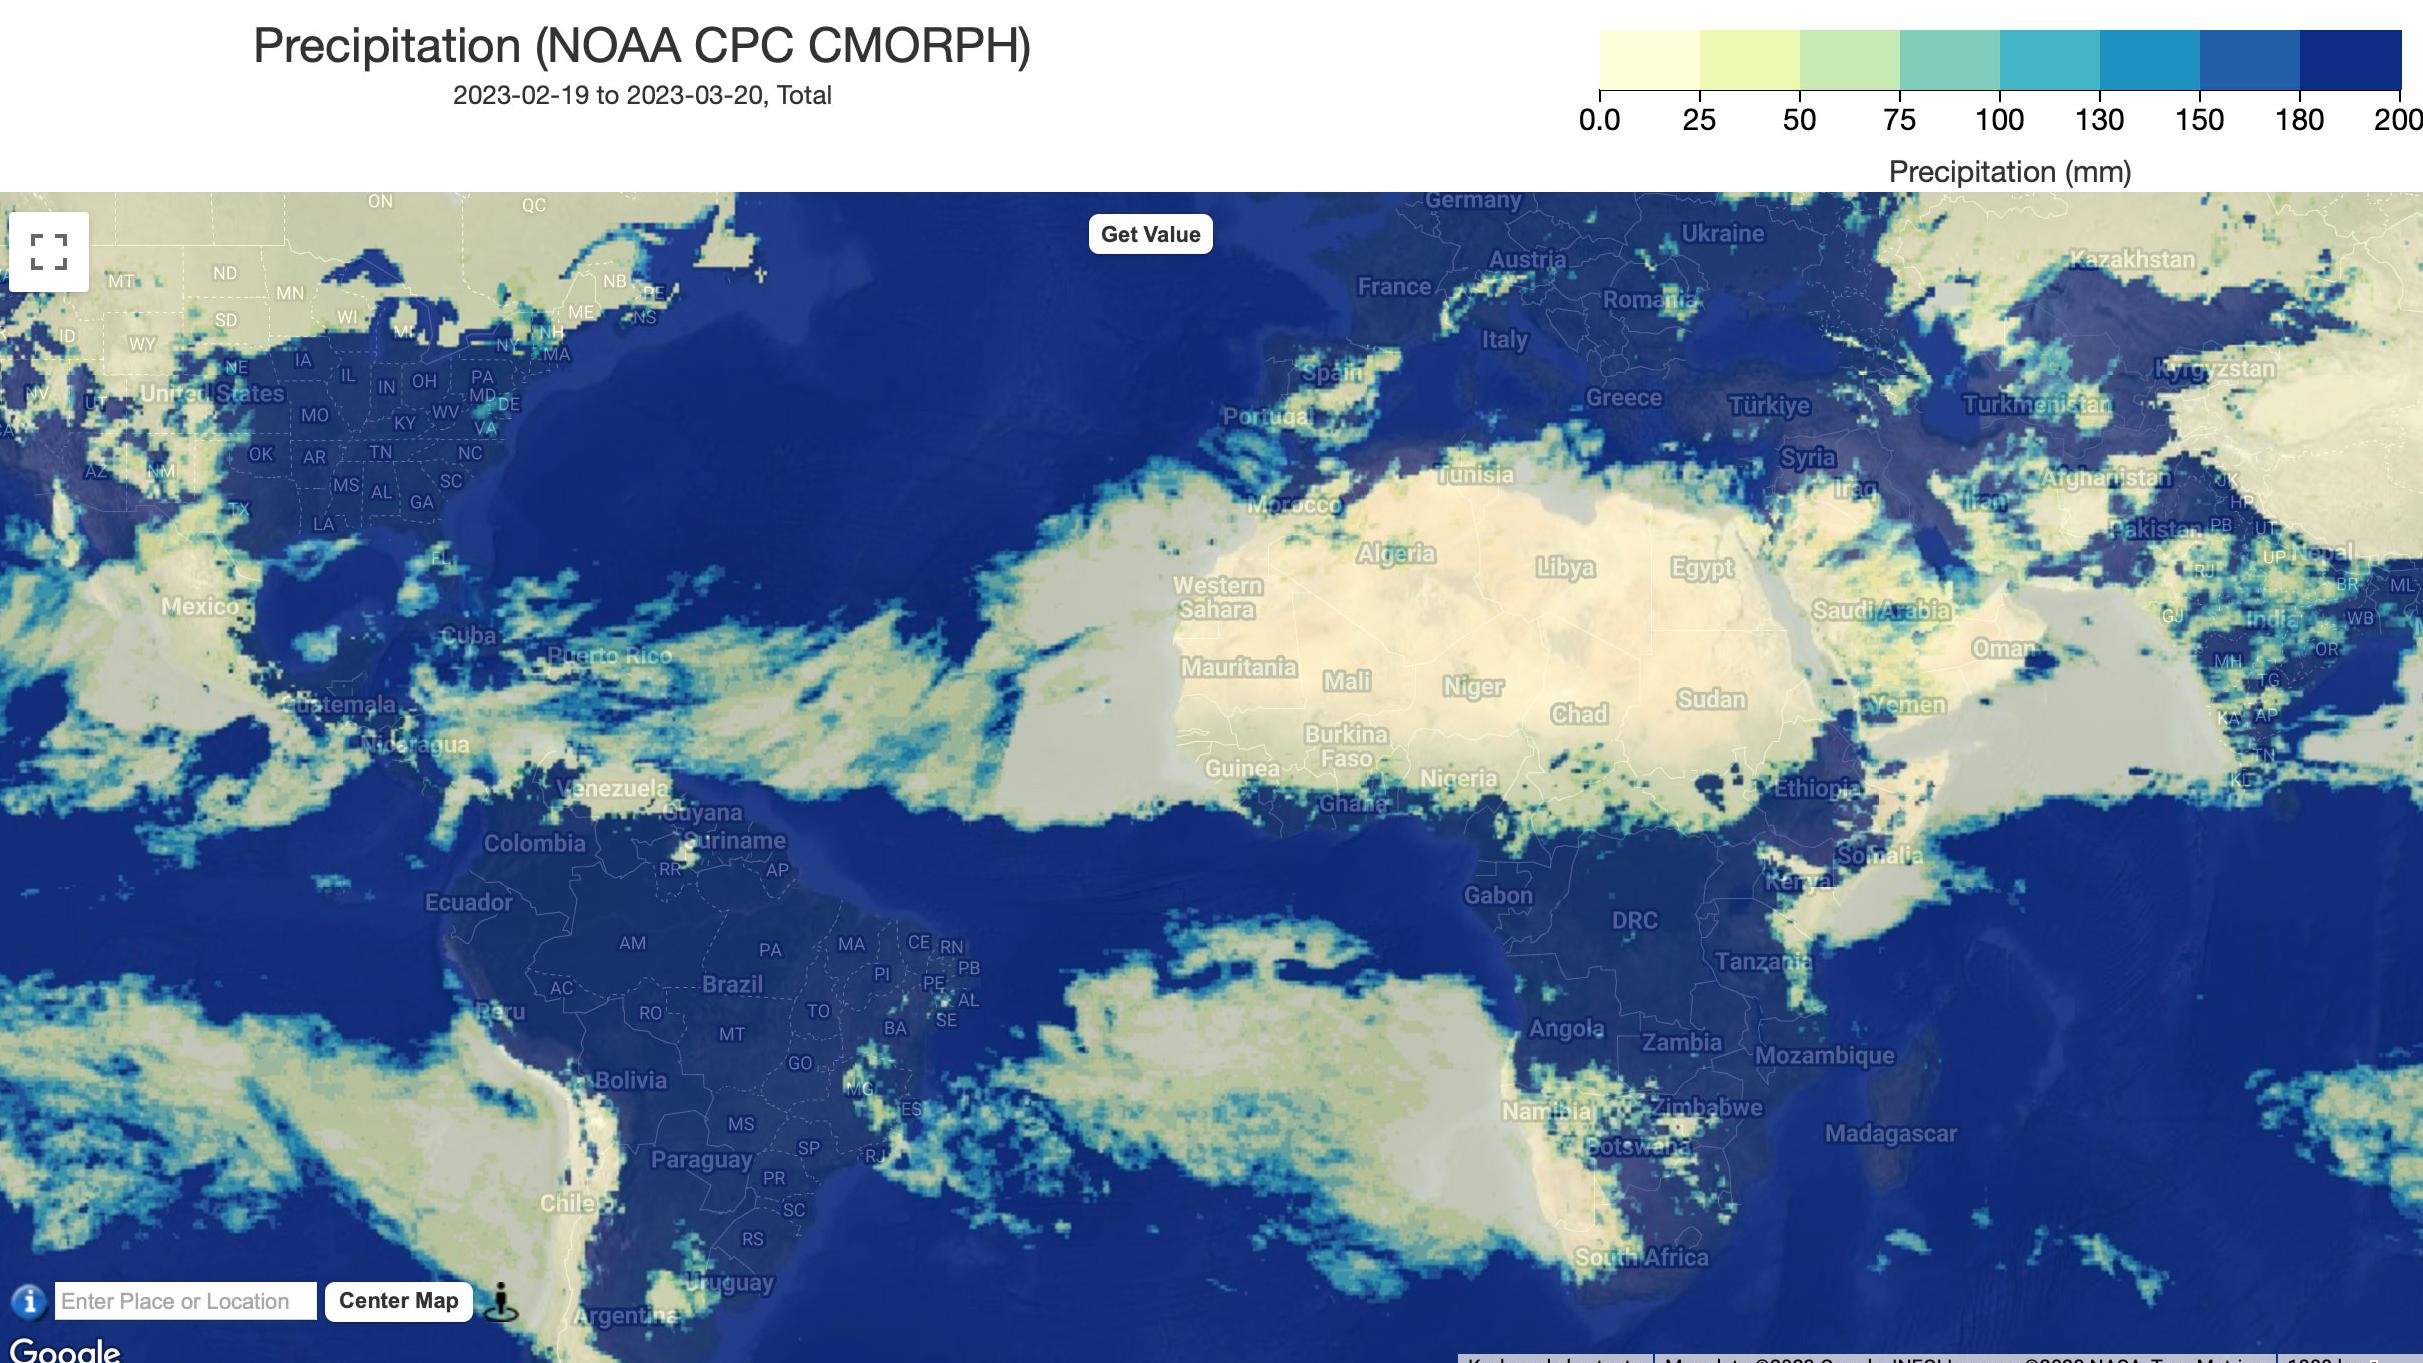 Precipitation NOAA CPC CMORPH from 2023 February to March